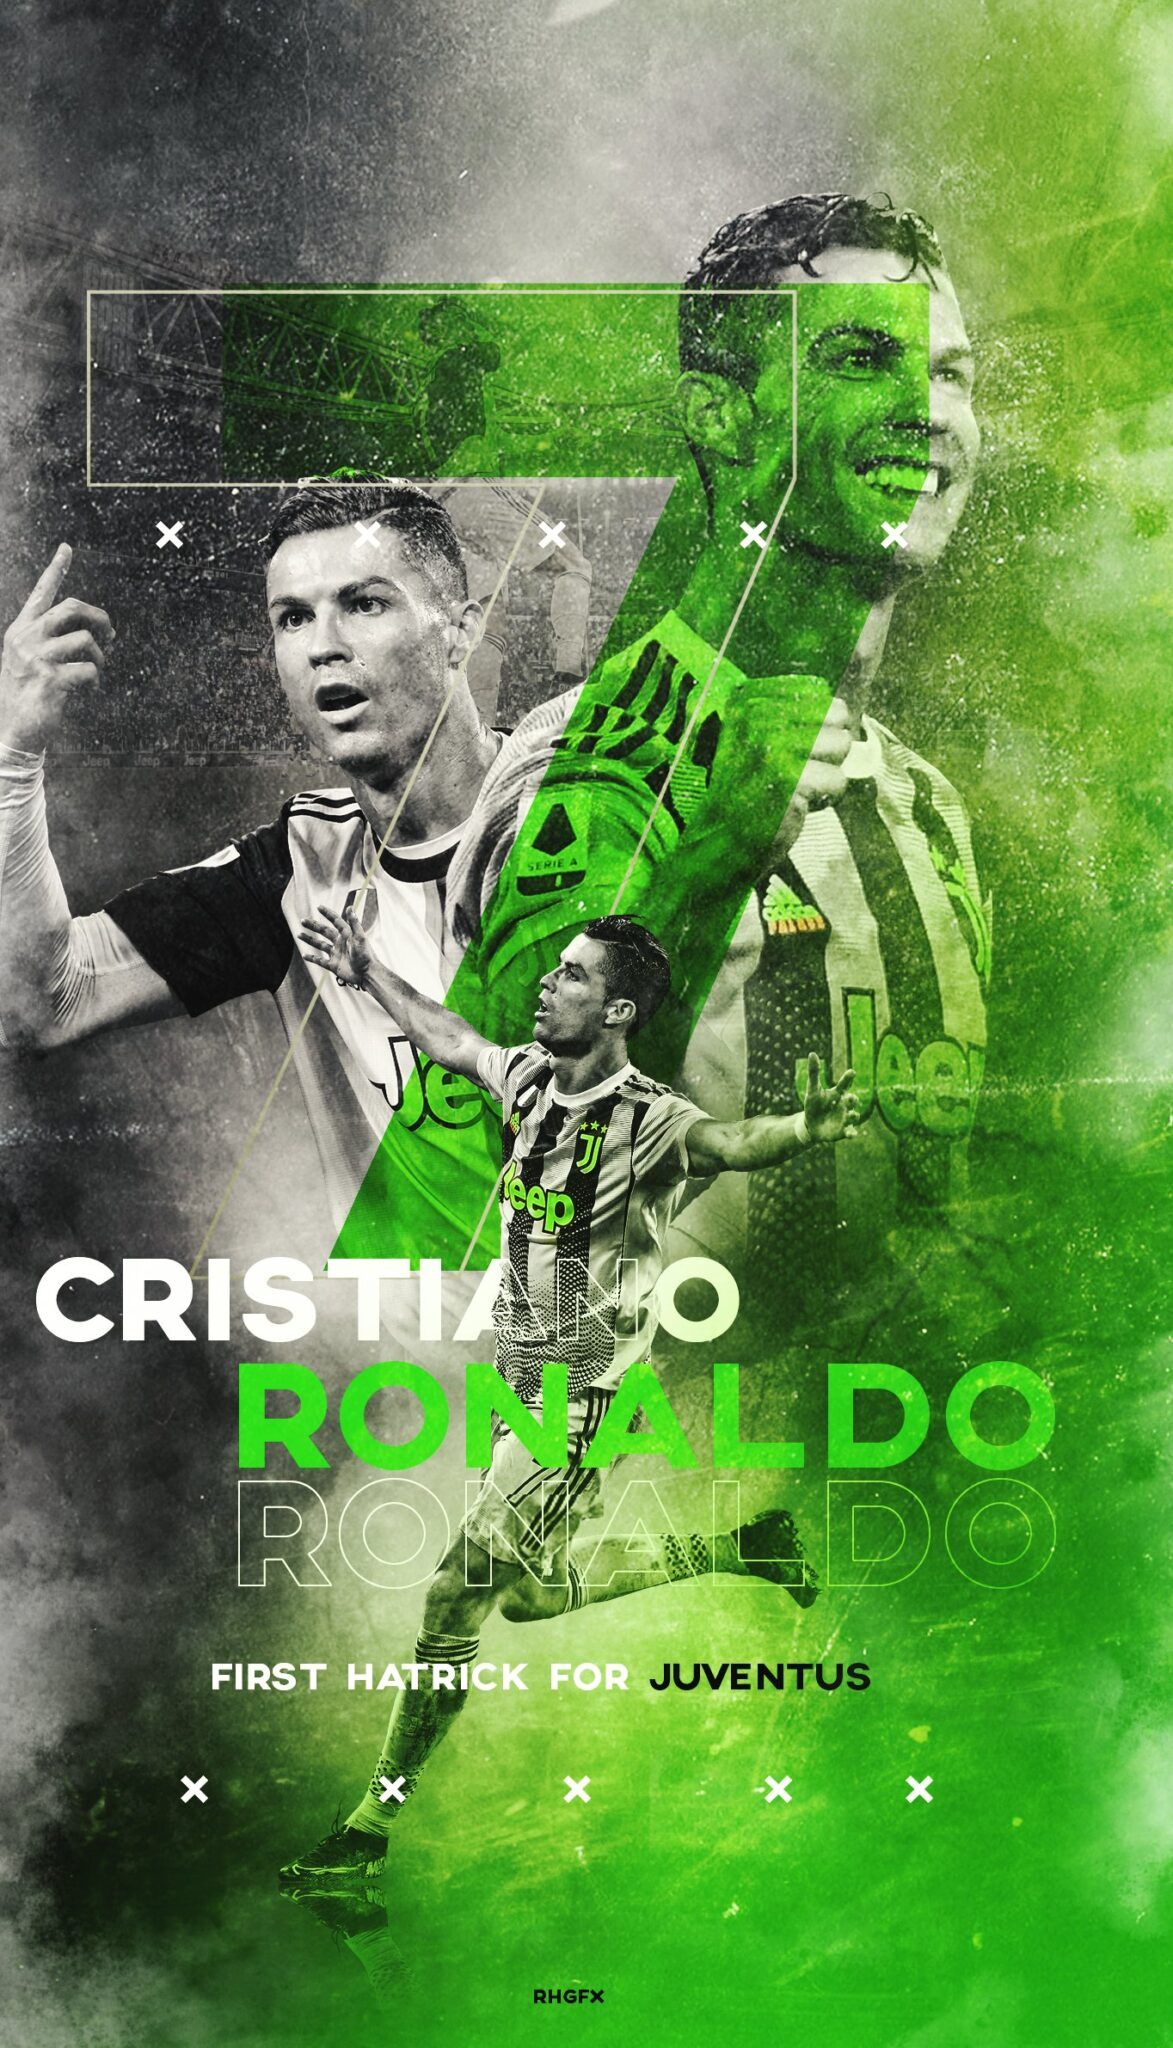 Ảnh Ronaldo ăn mừng